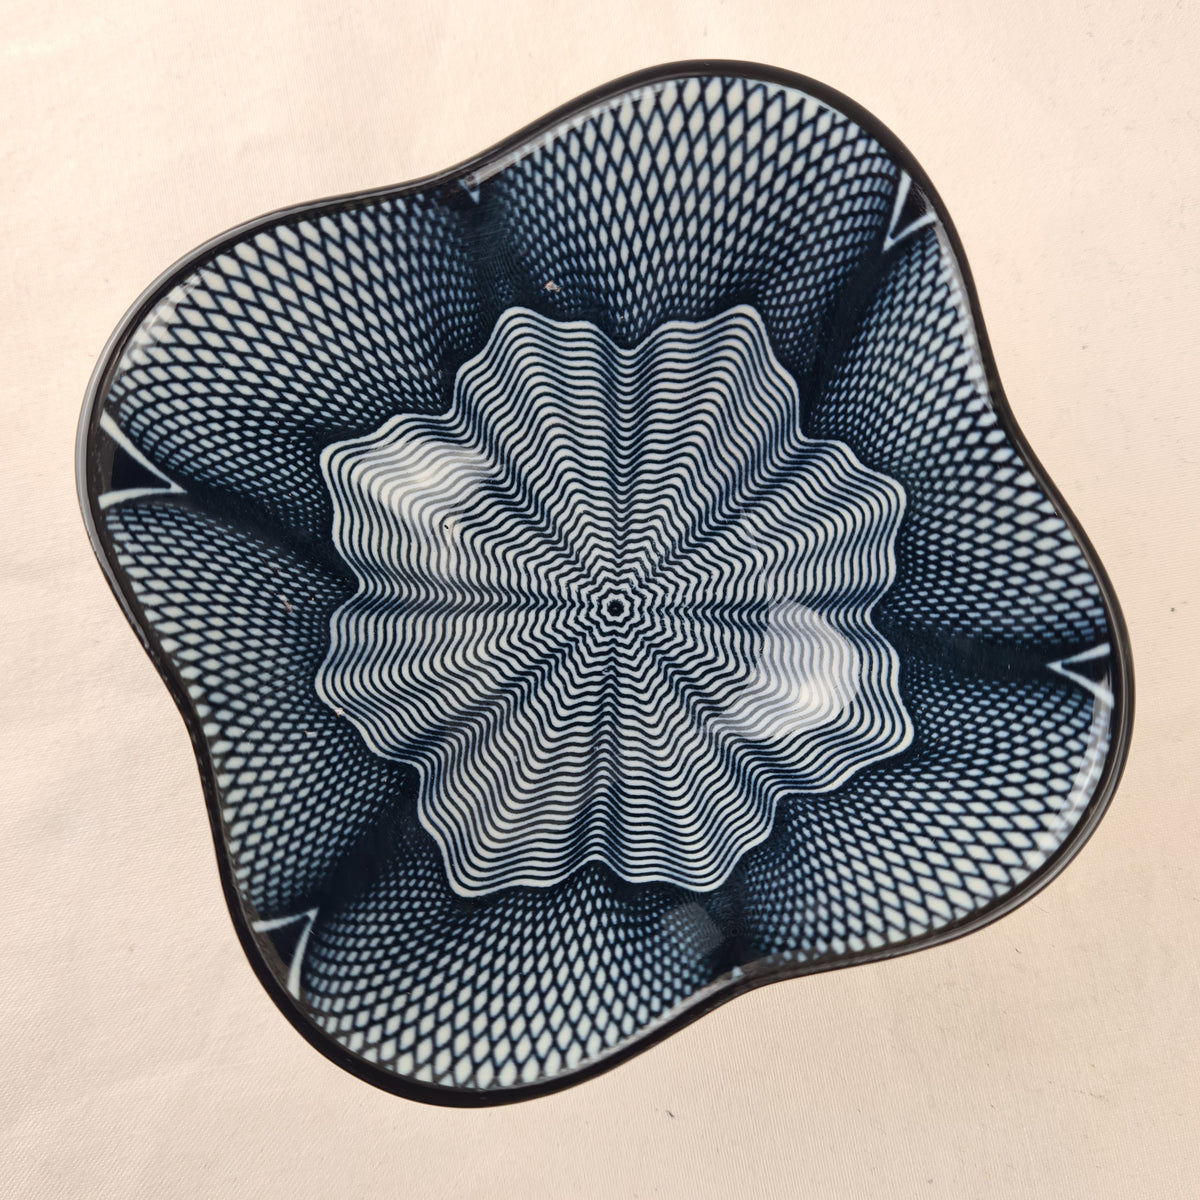 Flower shaped  bowl